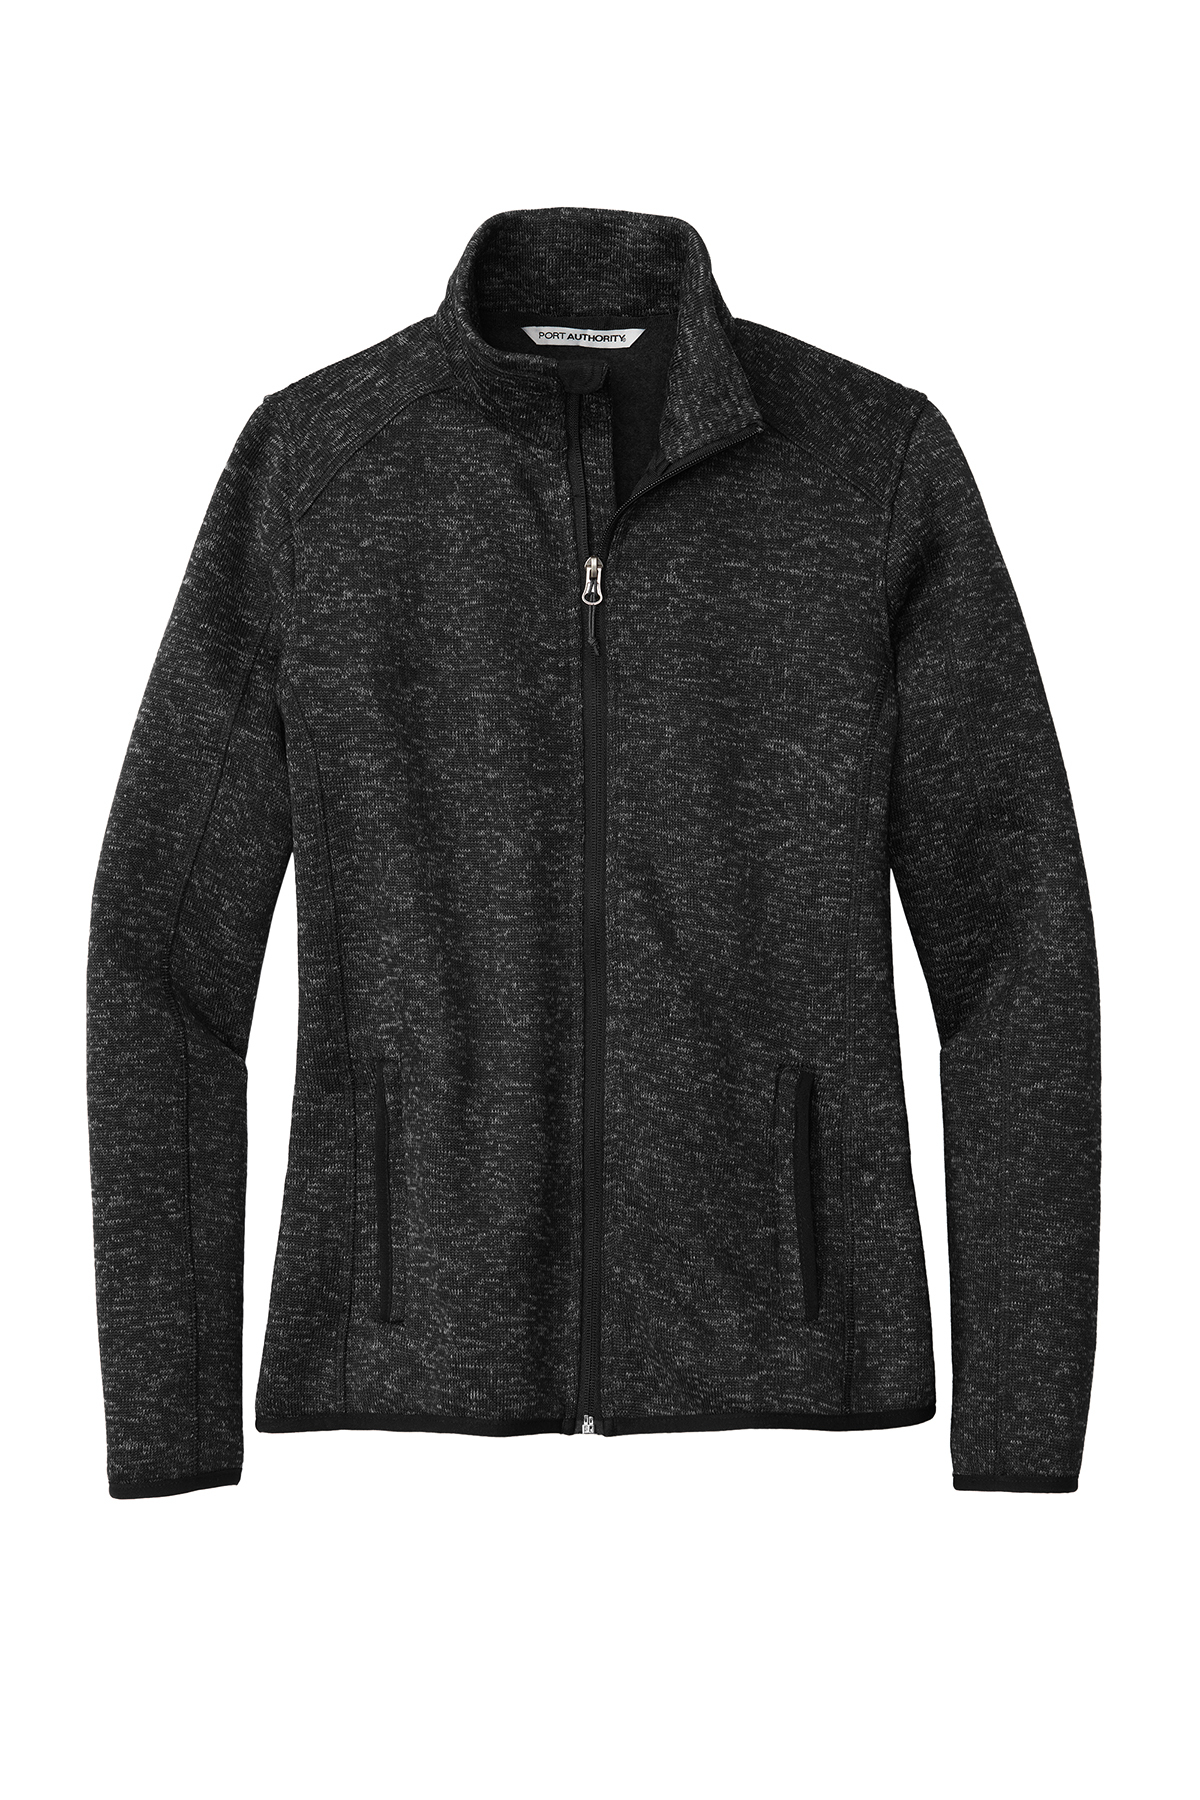 DRMC L232 Port Authority Ladies Sweater Fleece Jacket (Black